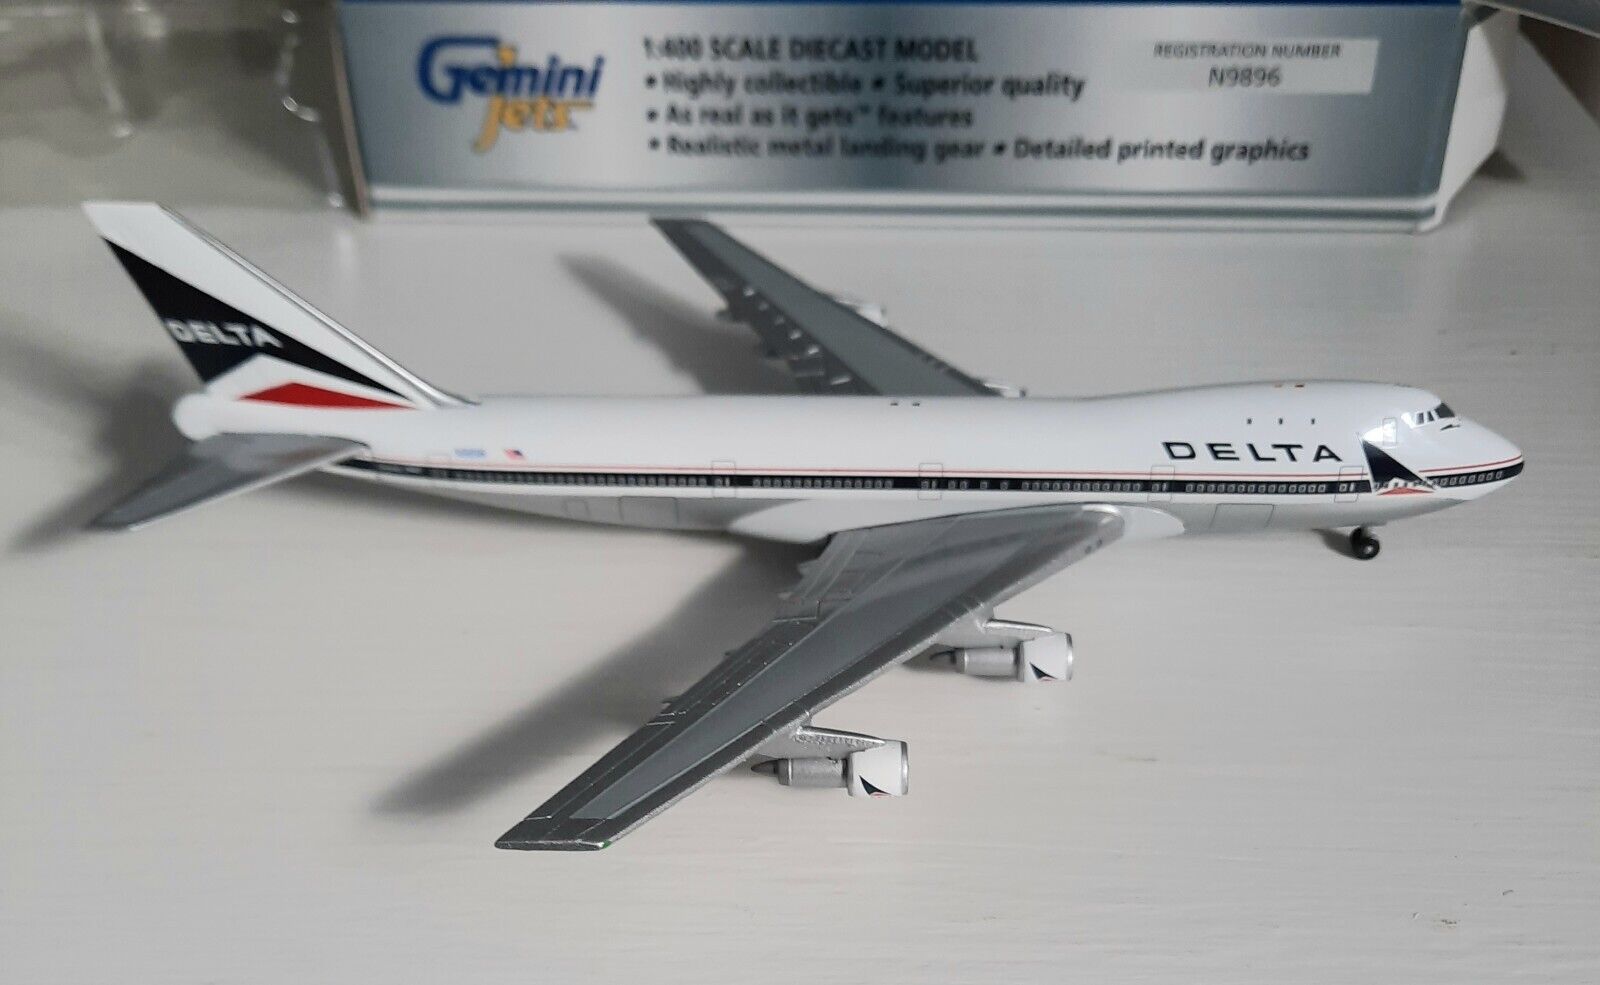 1/400 Delta Airlines 747 N9896 Gemini Jets (+VAT)